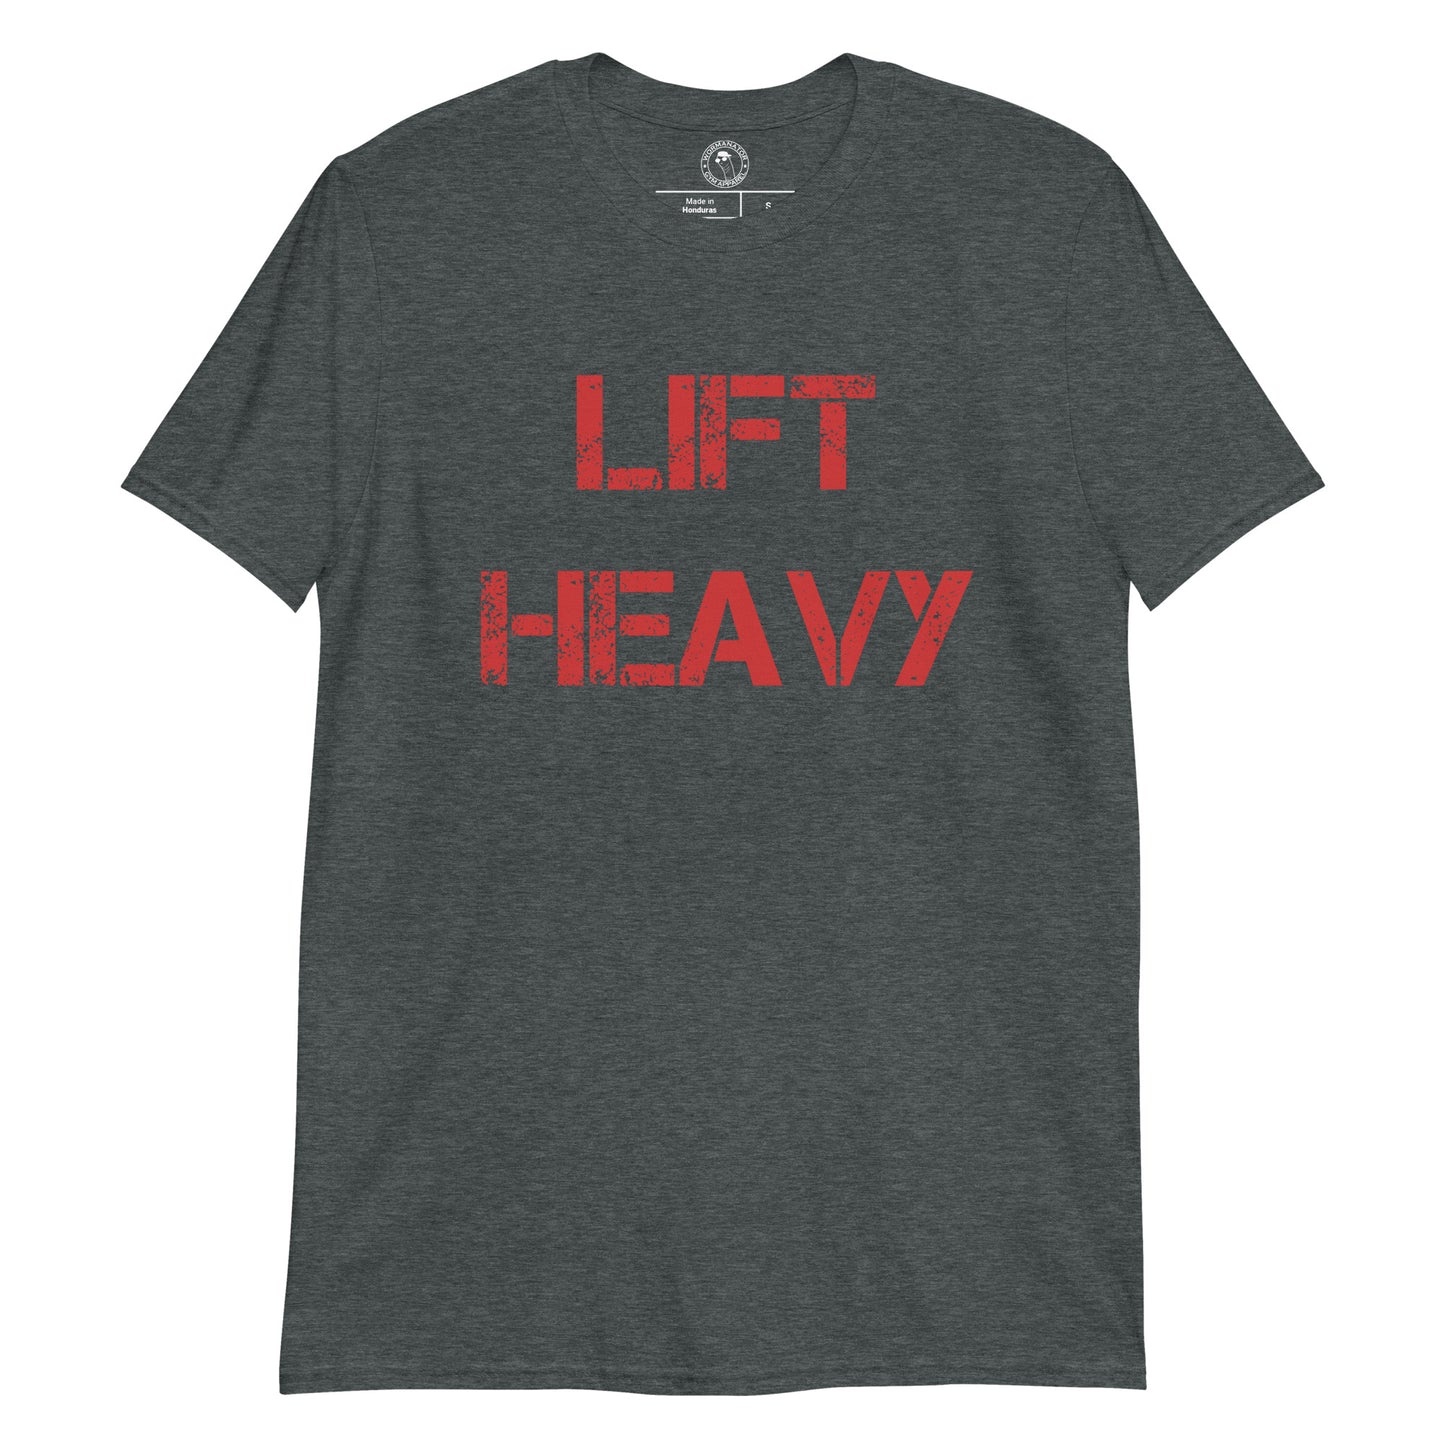 Lift Heavy Shirt in Dark Heather